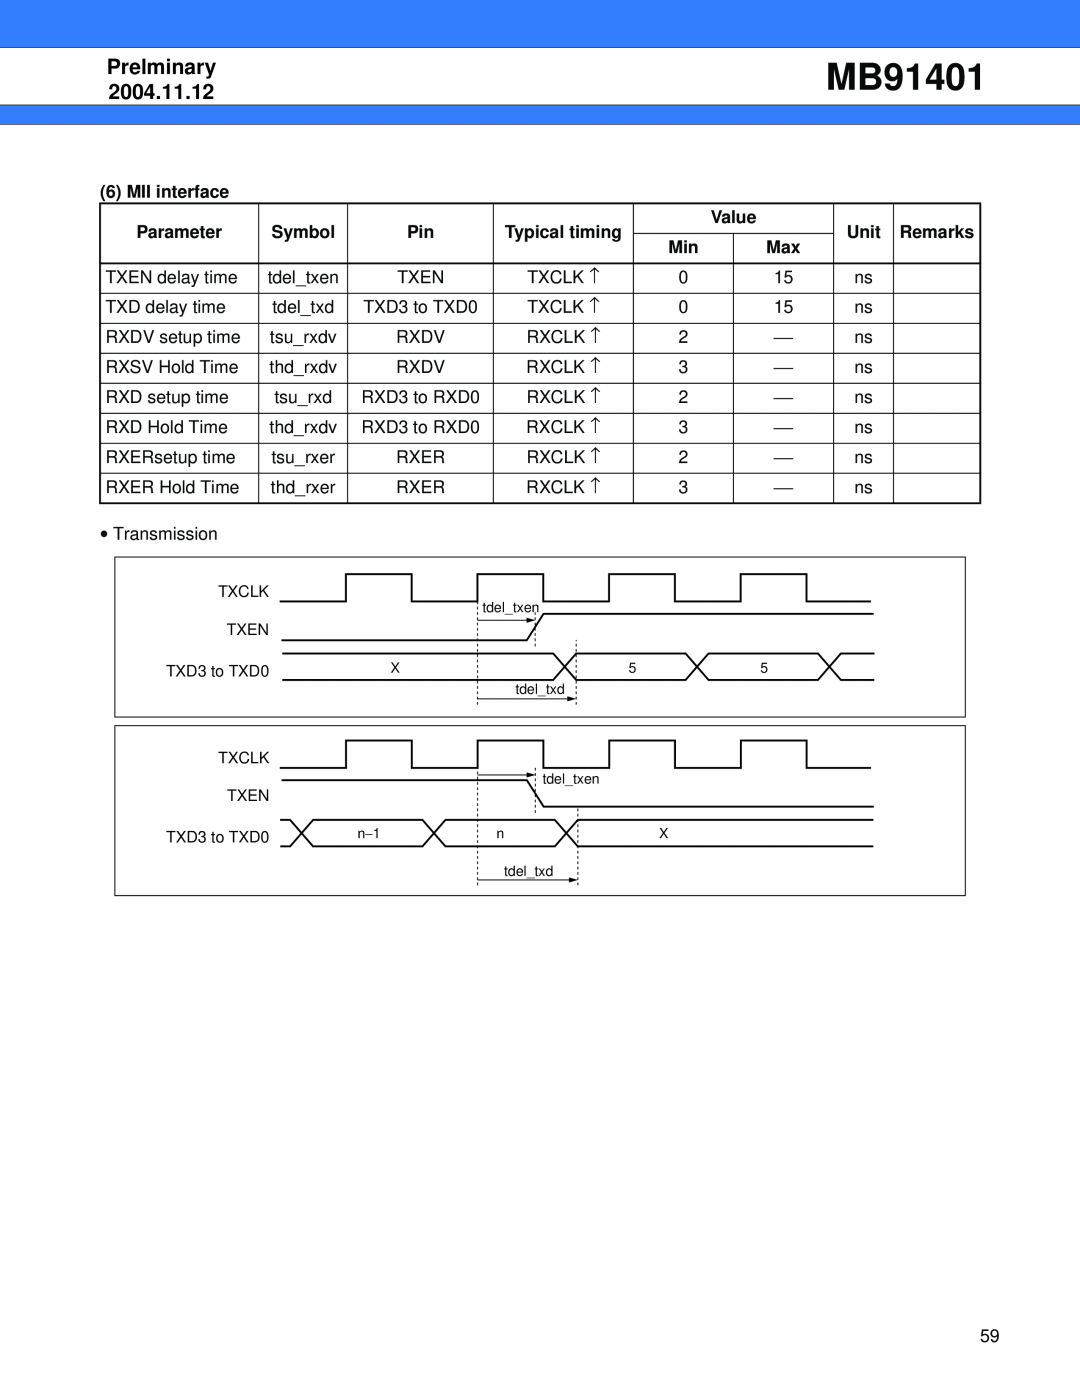 Fujitsu MB91401 manual MII interface, Prelminary, 2004.11.12, Parameter, Symbol, Typical timing, Value, Unit, Remarks 